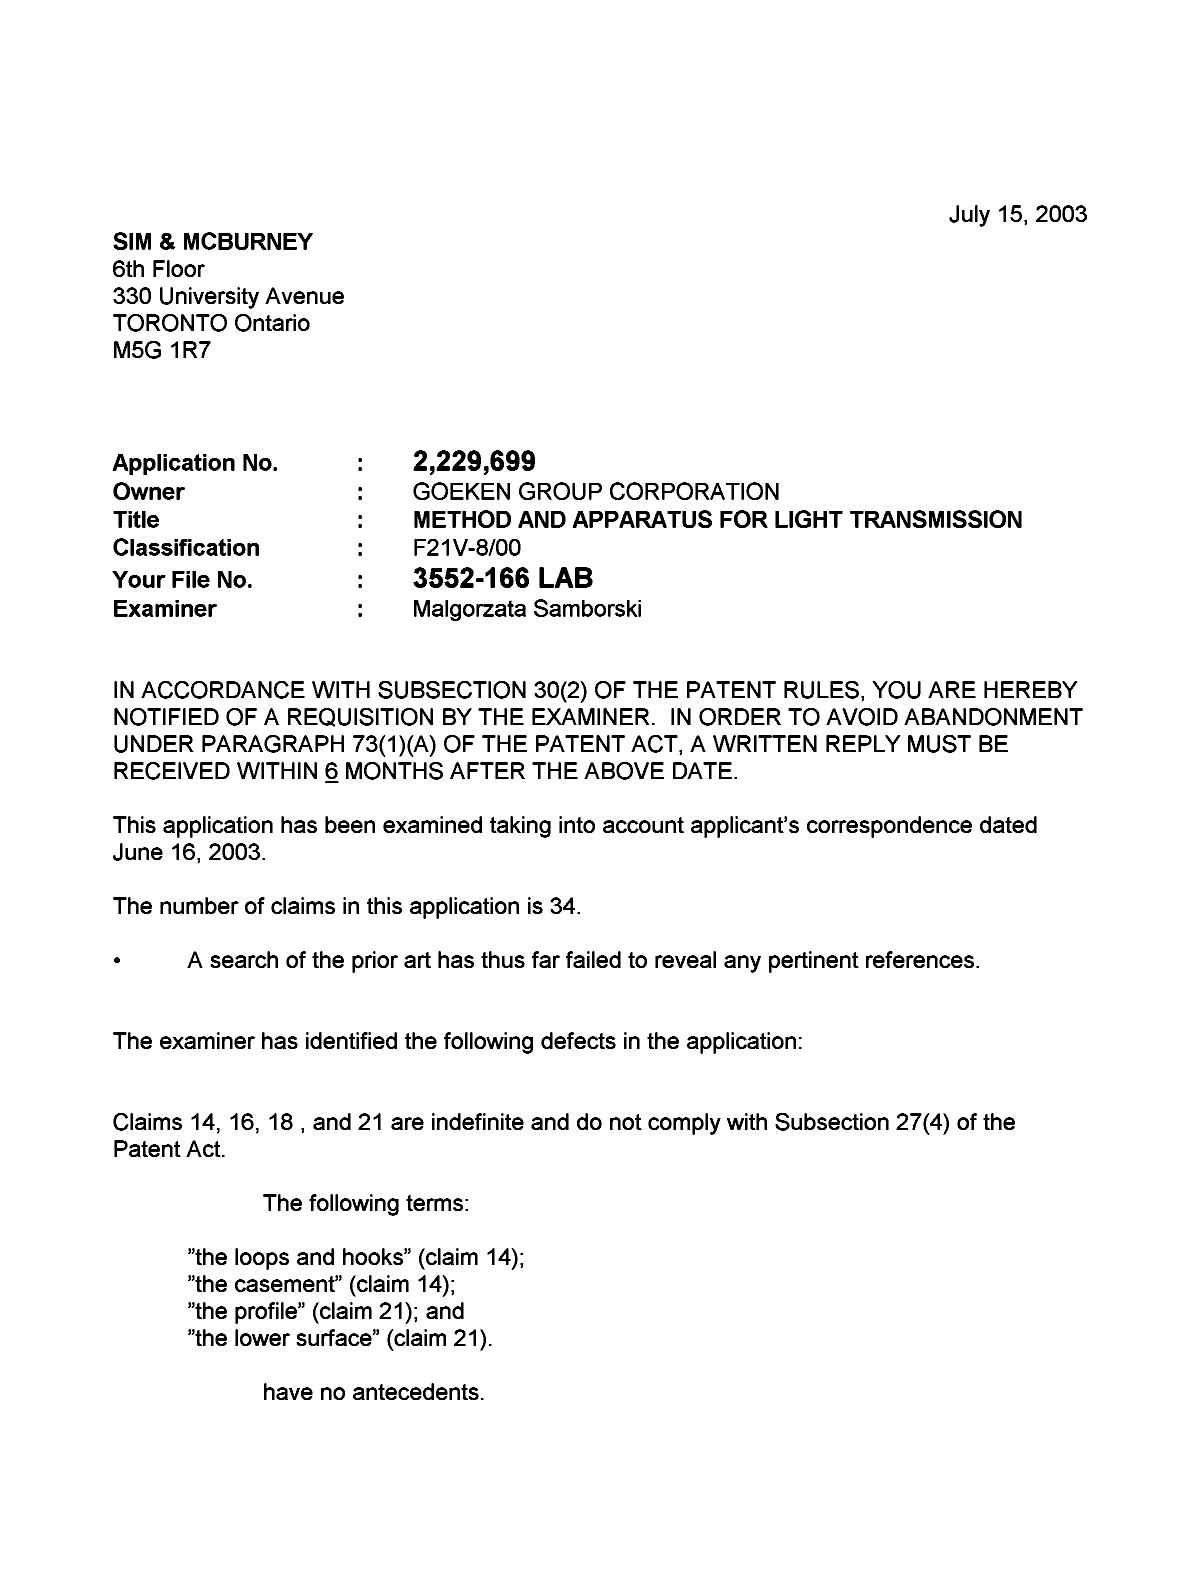 Canadian Patent Document 2229699. Prosecution-Amendment 20030715. Image 1 of 2